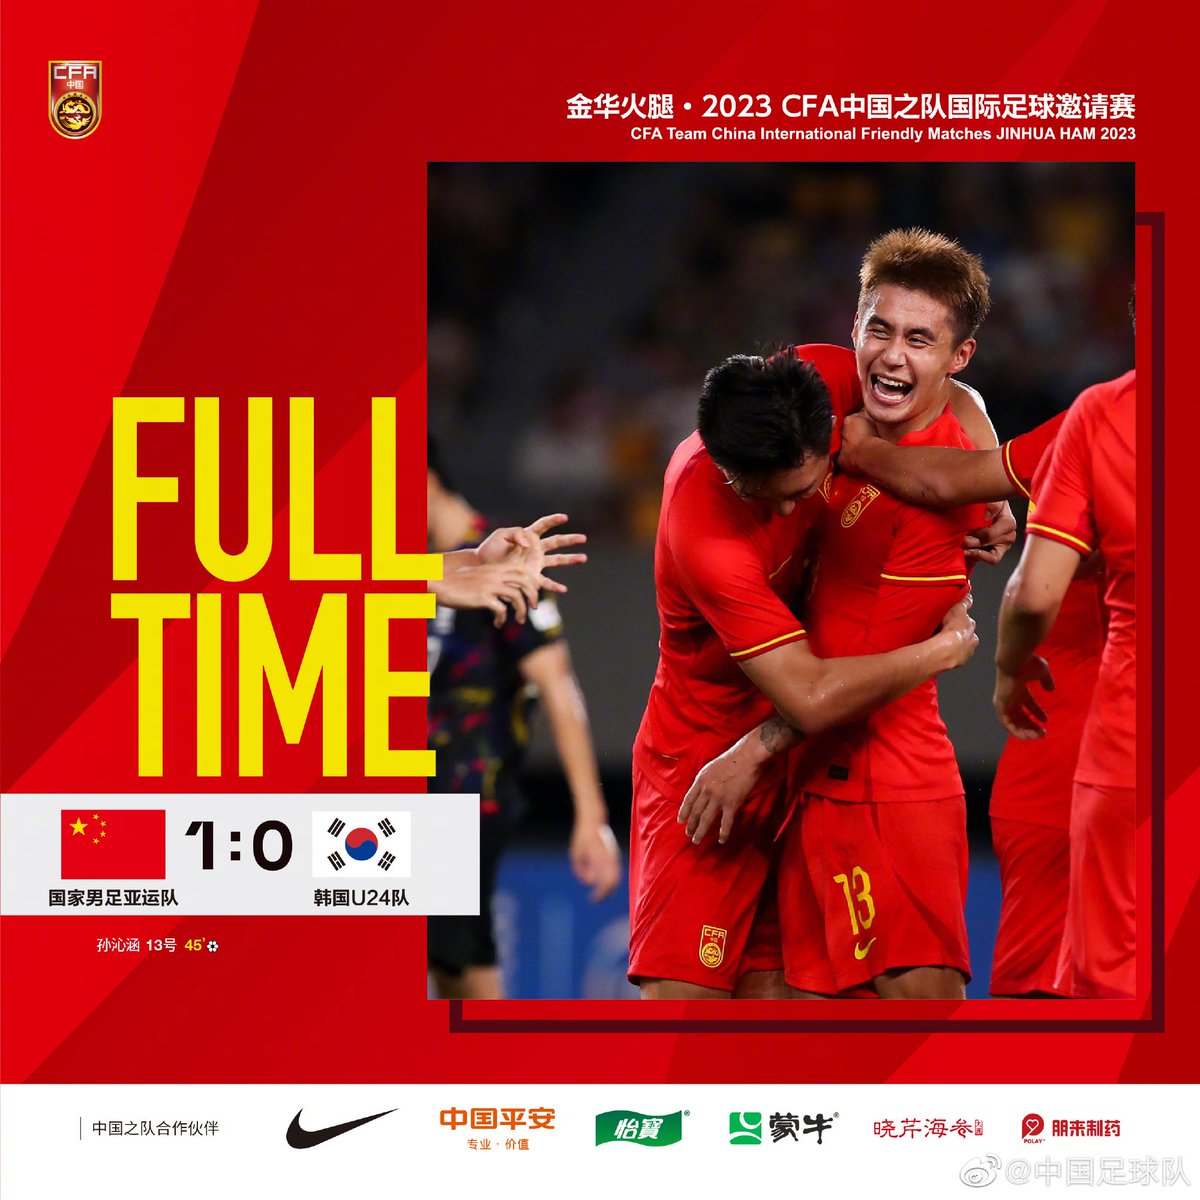 FULL TIME

International Friendly Match

China U24 1-0 South Korea U24

45' Sun Qinhan ⚽️

#TeamChina